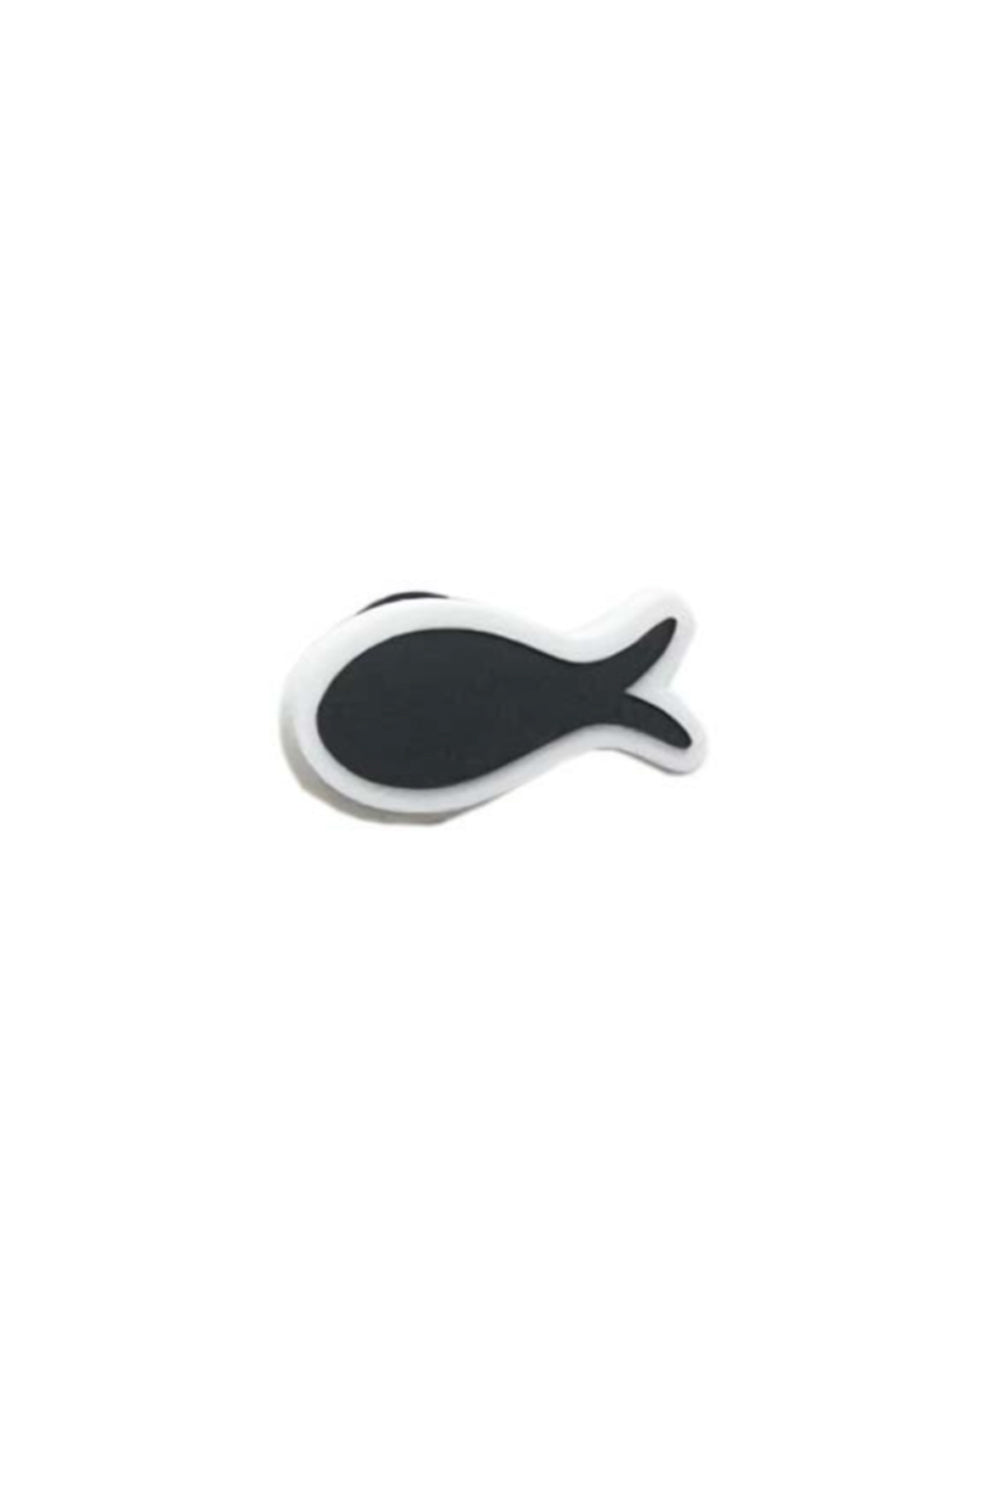 Shoe Charm - Black Fish